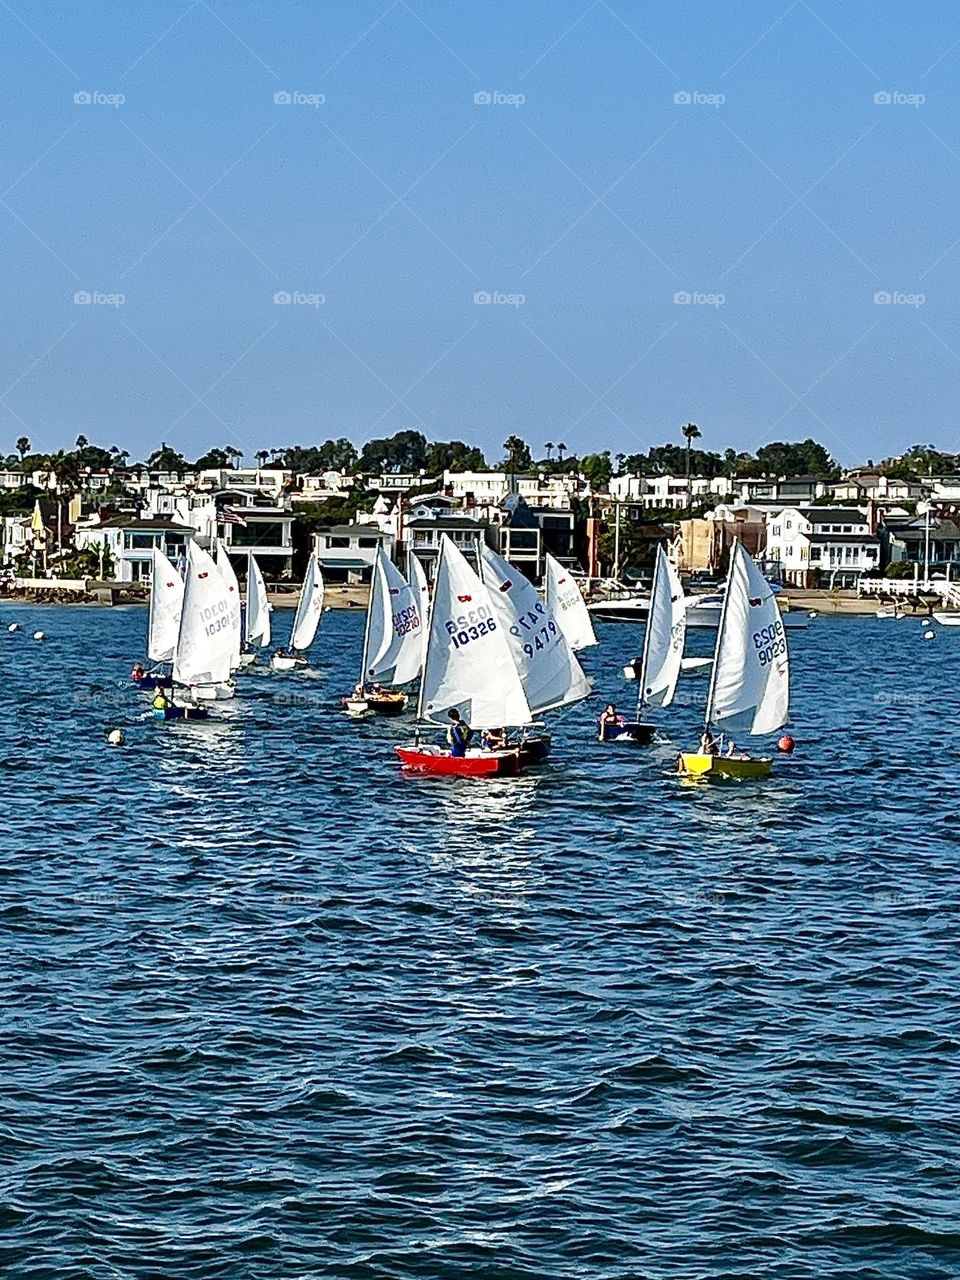 Summertime Sailboat Race